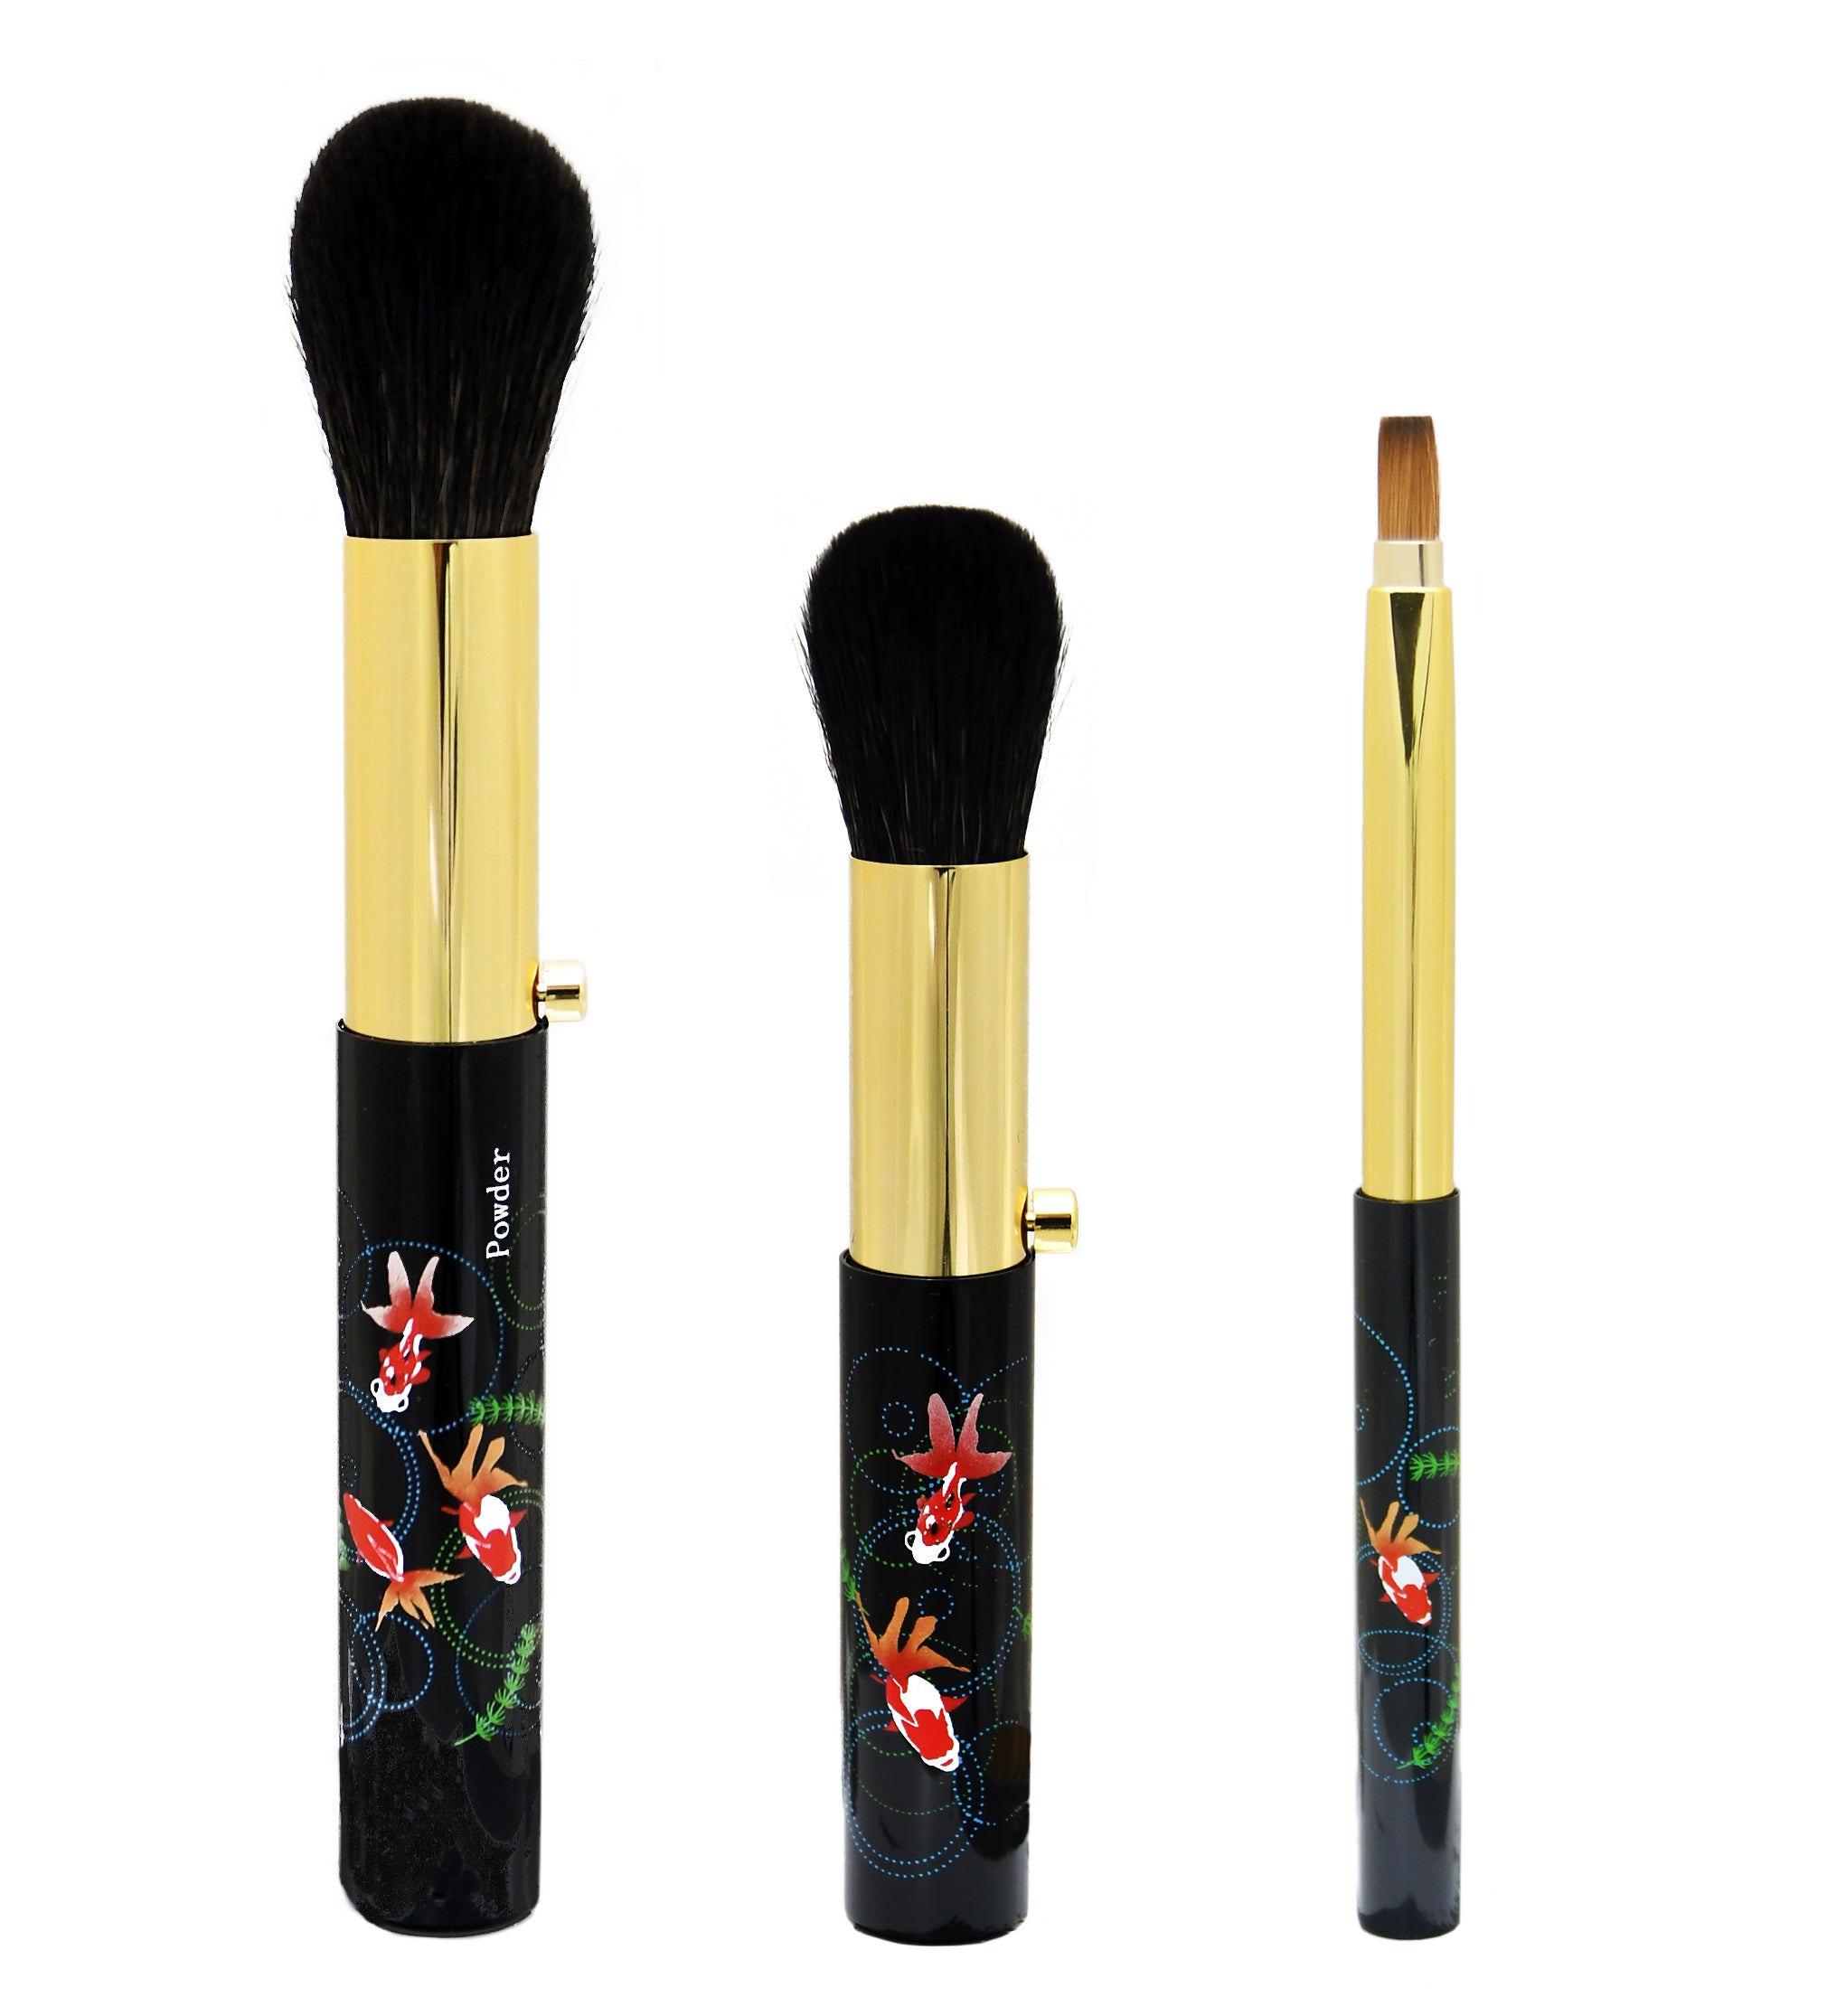 Kumanofude Portable High-quality Makeup Brush Set with Makie